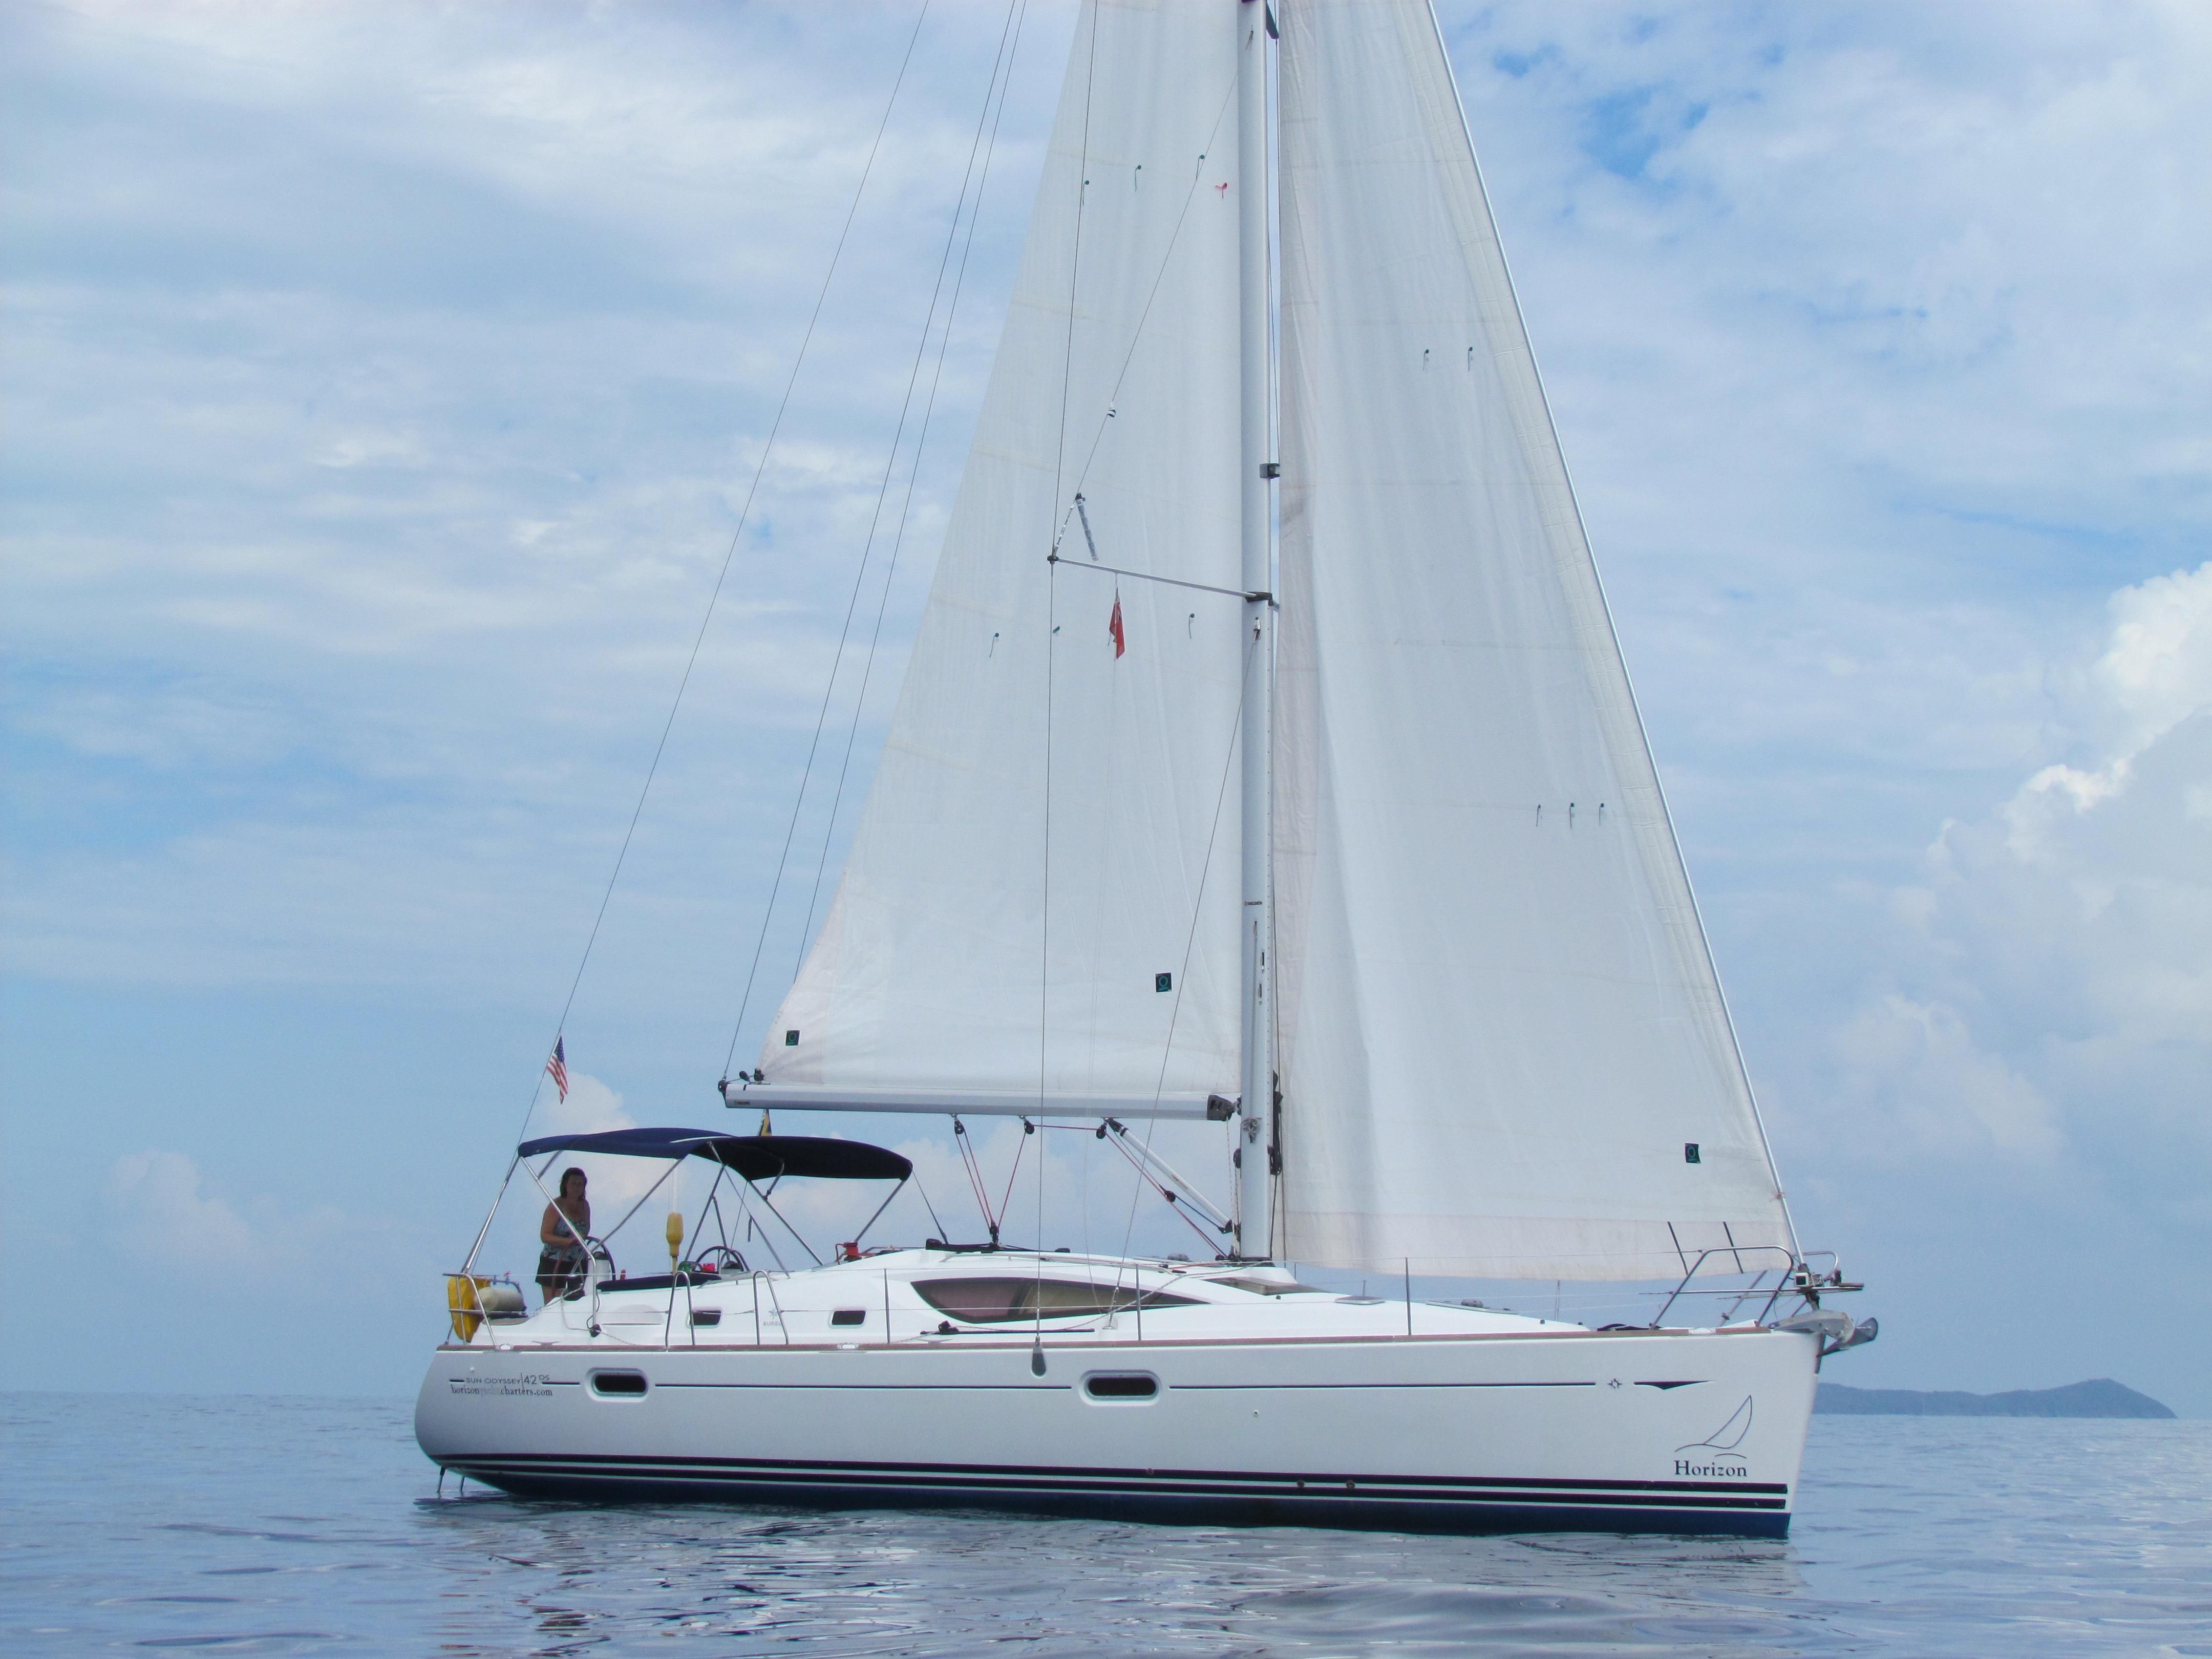 42 foot jeanneau sailboat for sale